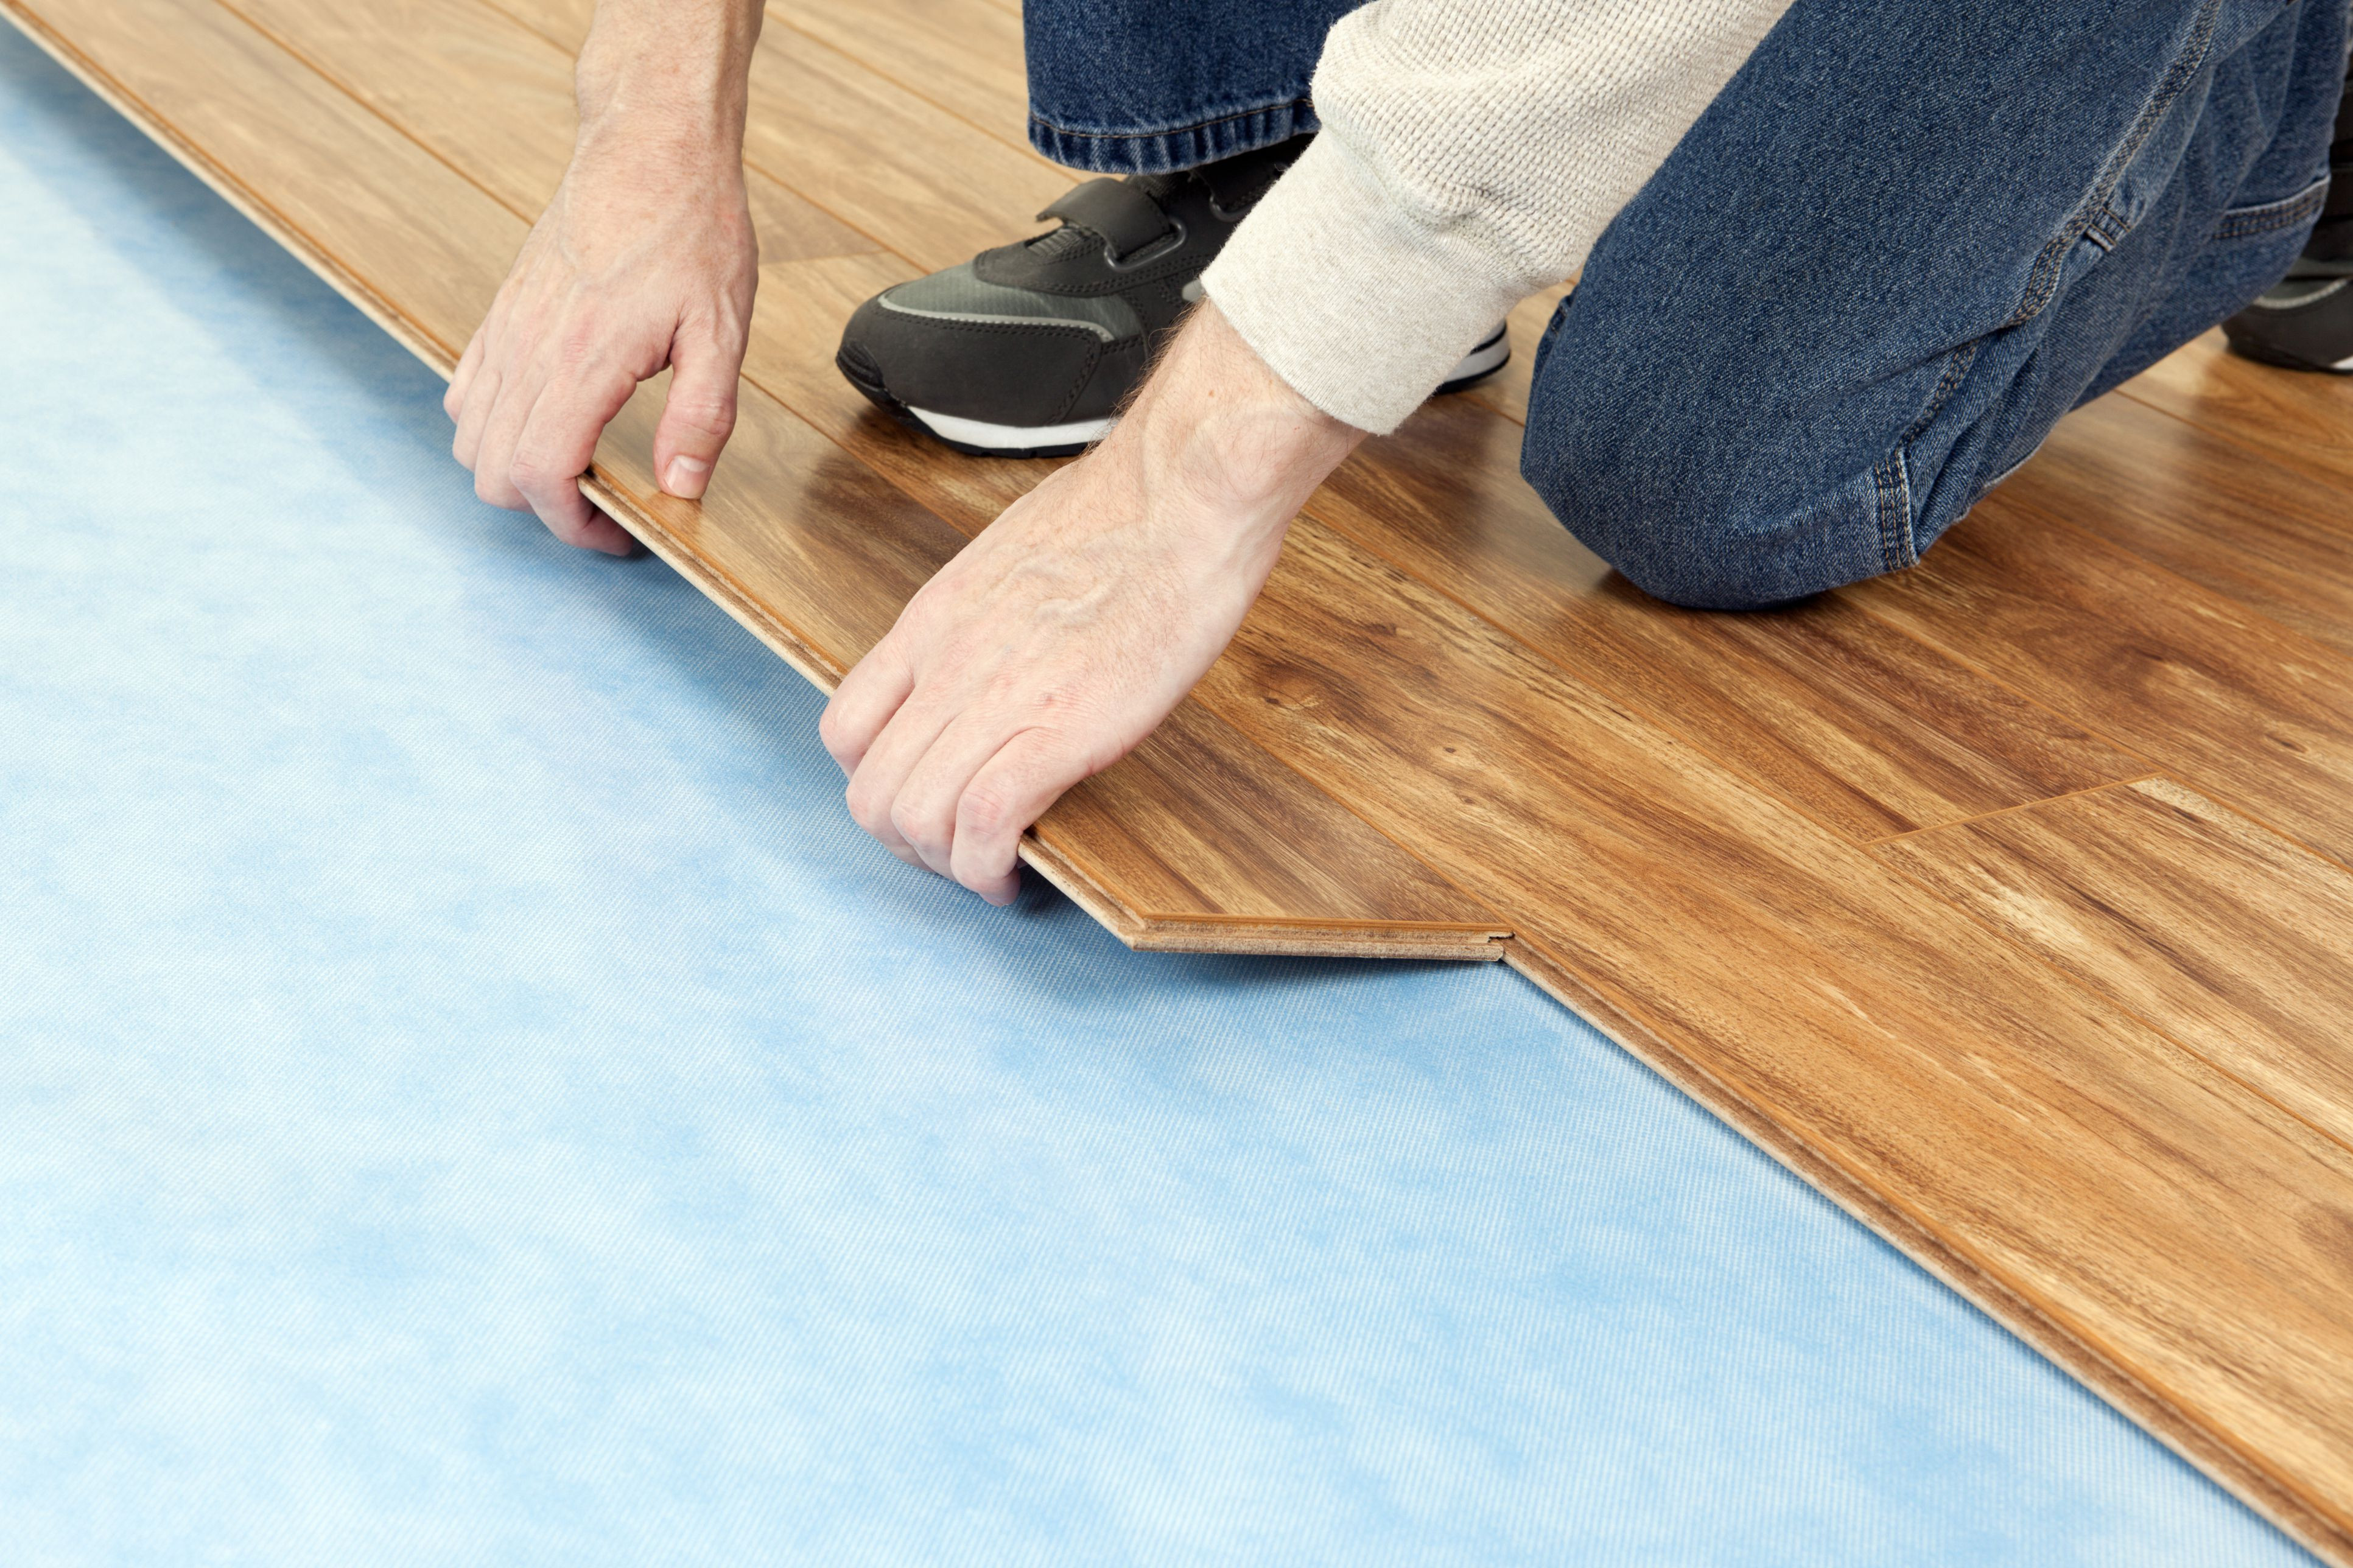 rosin paper for hardwood flooring of flooring underlayment the basics intended for new floor installation 185270632 582b722c3df78c6f6af0a8ab